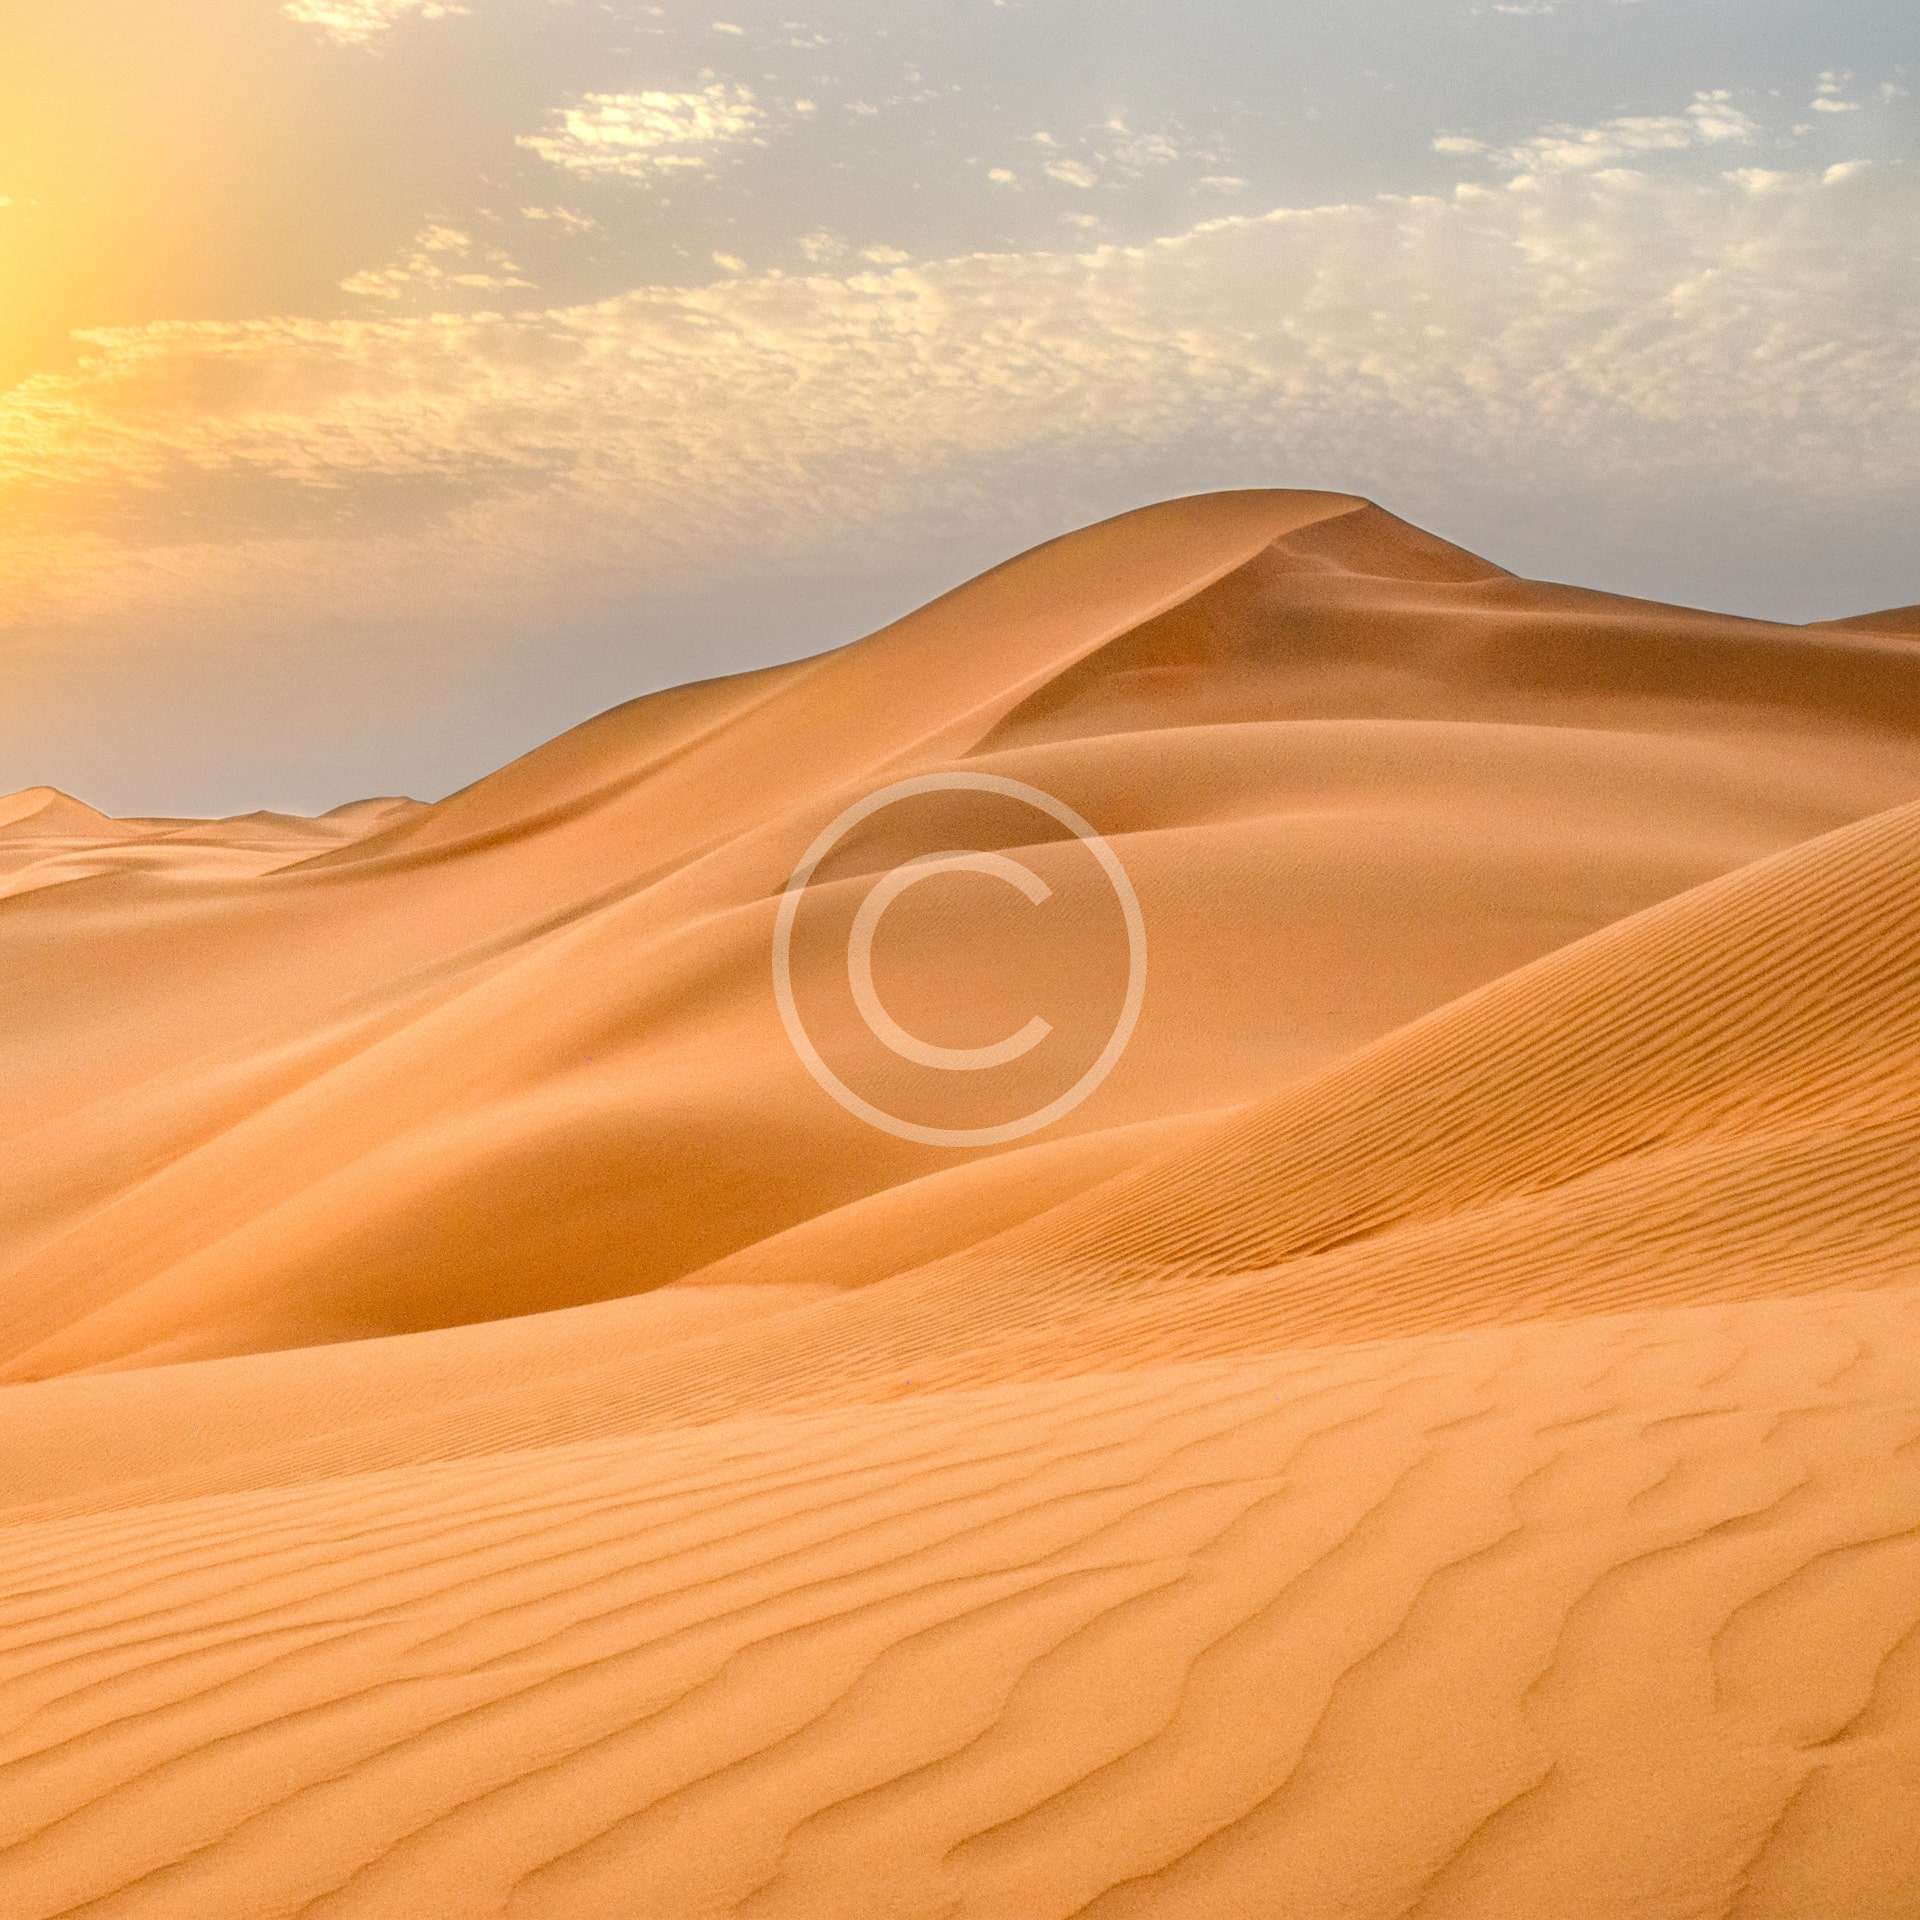 In a desert